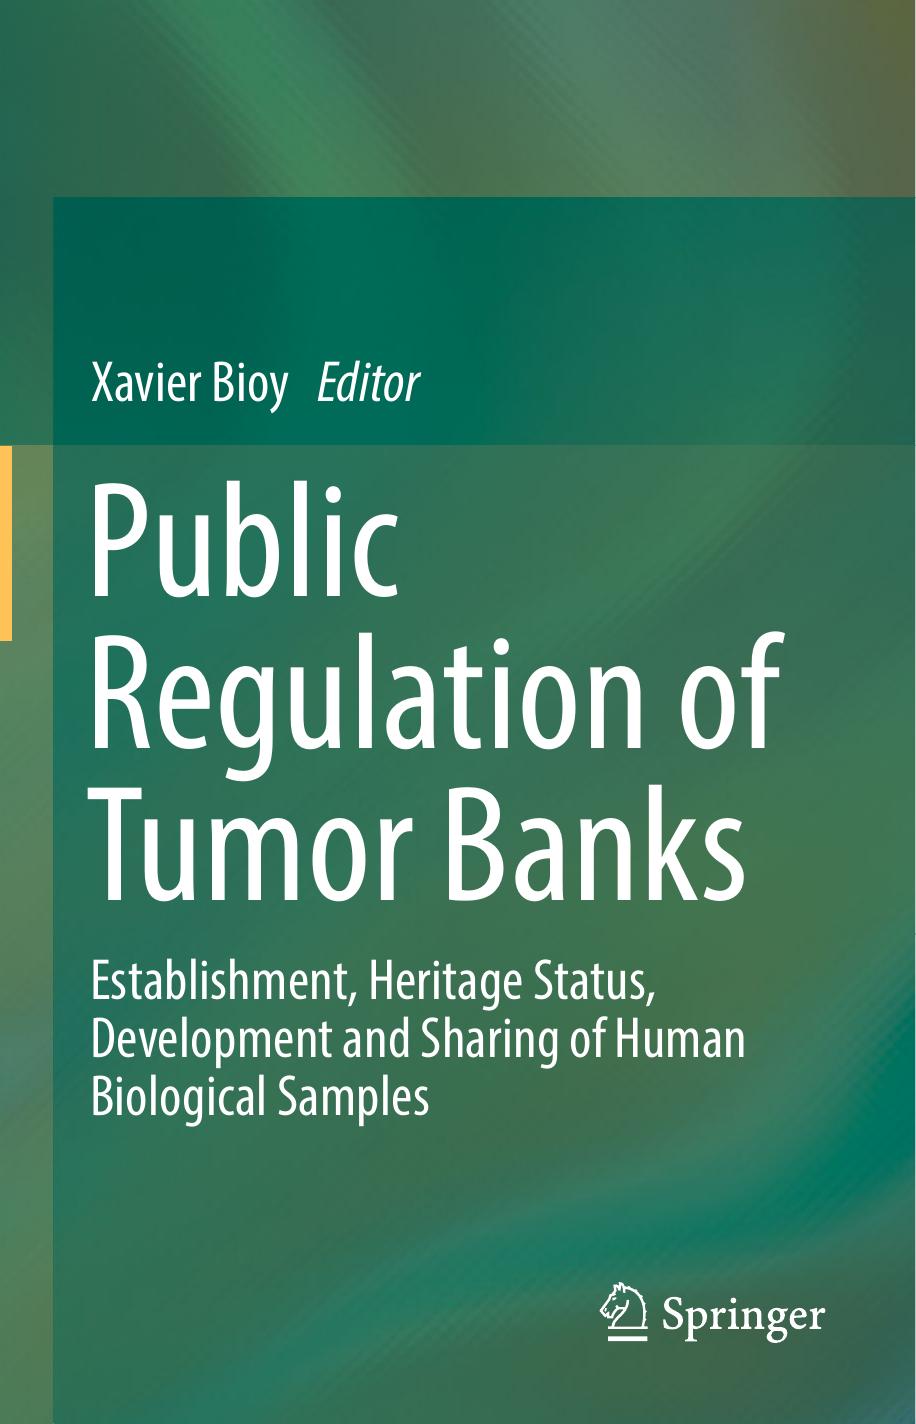 Public Regulation of Tumor Banks 2018.pdf